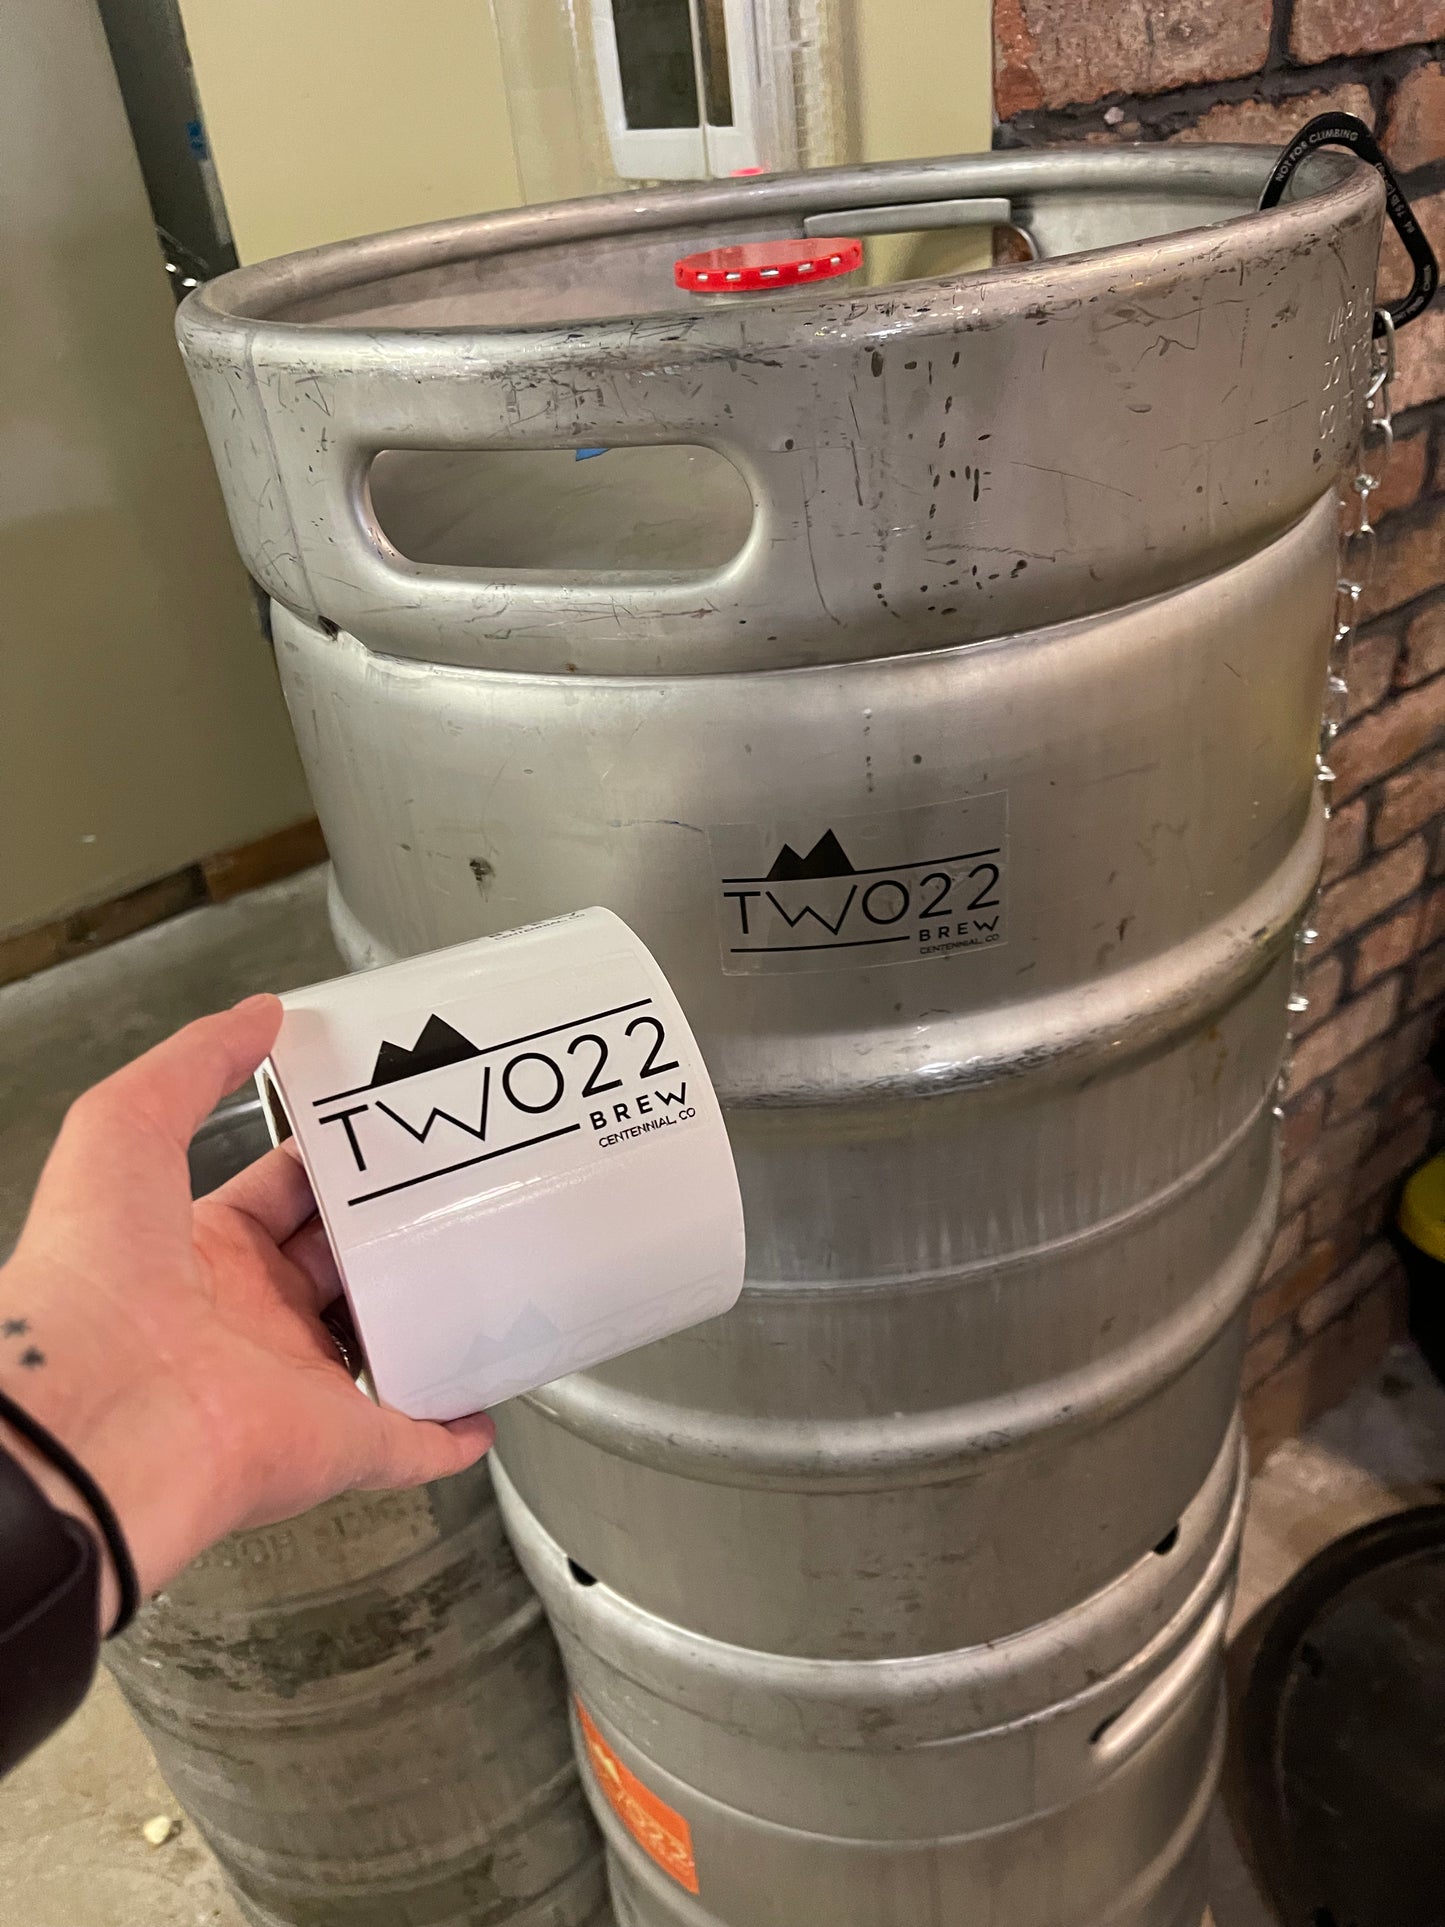 Two22 Brew stickers